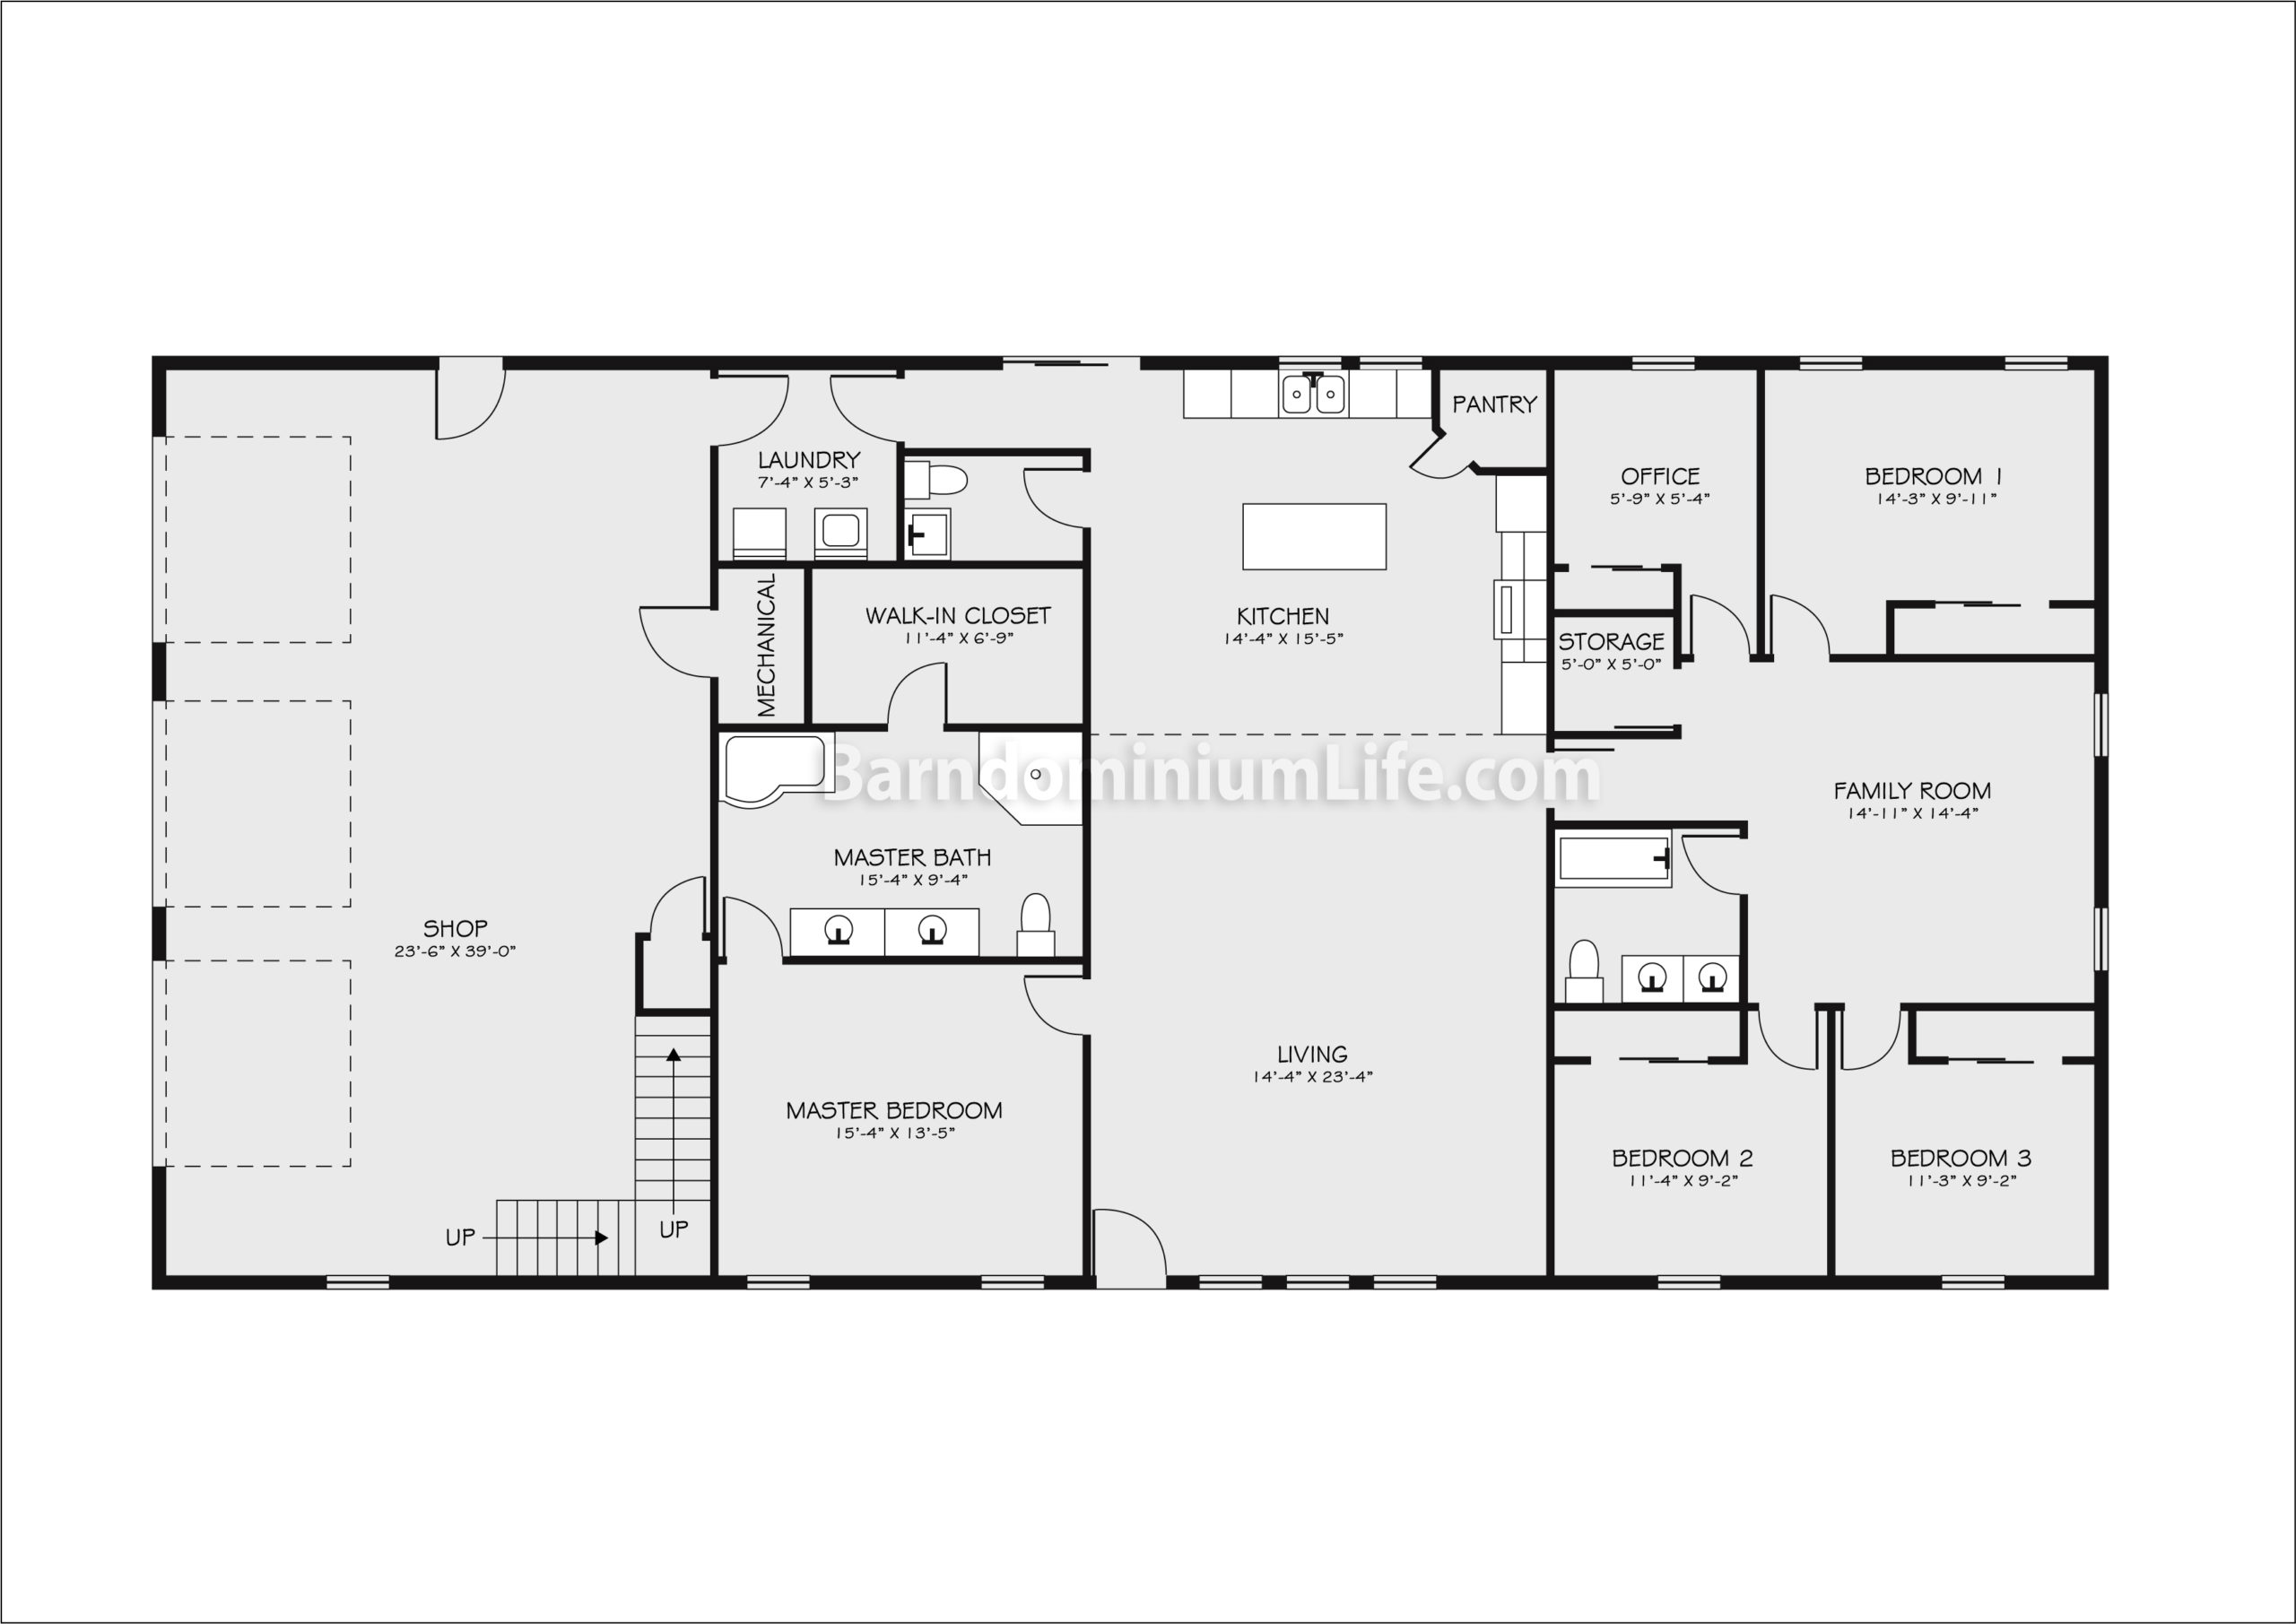 Barndominium Floor Plans with Shop: Top Ideas, Floor Plans, and Examples